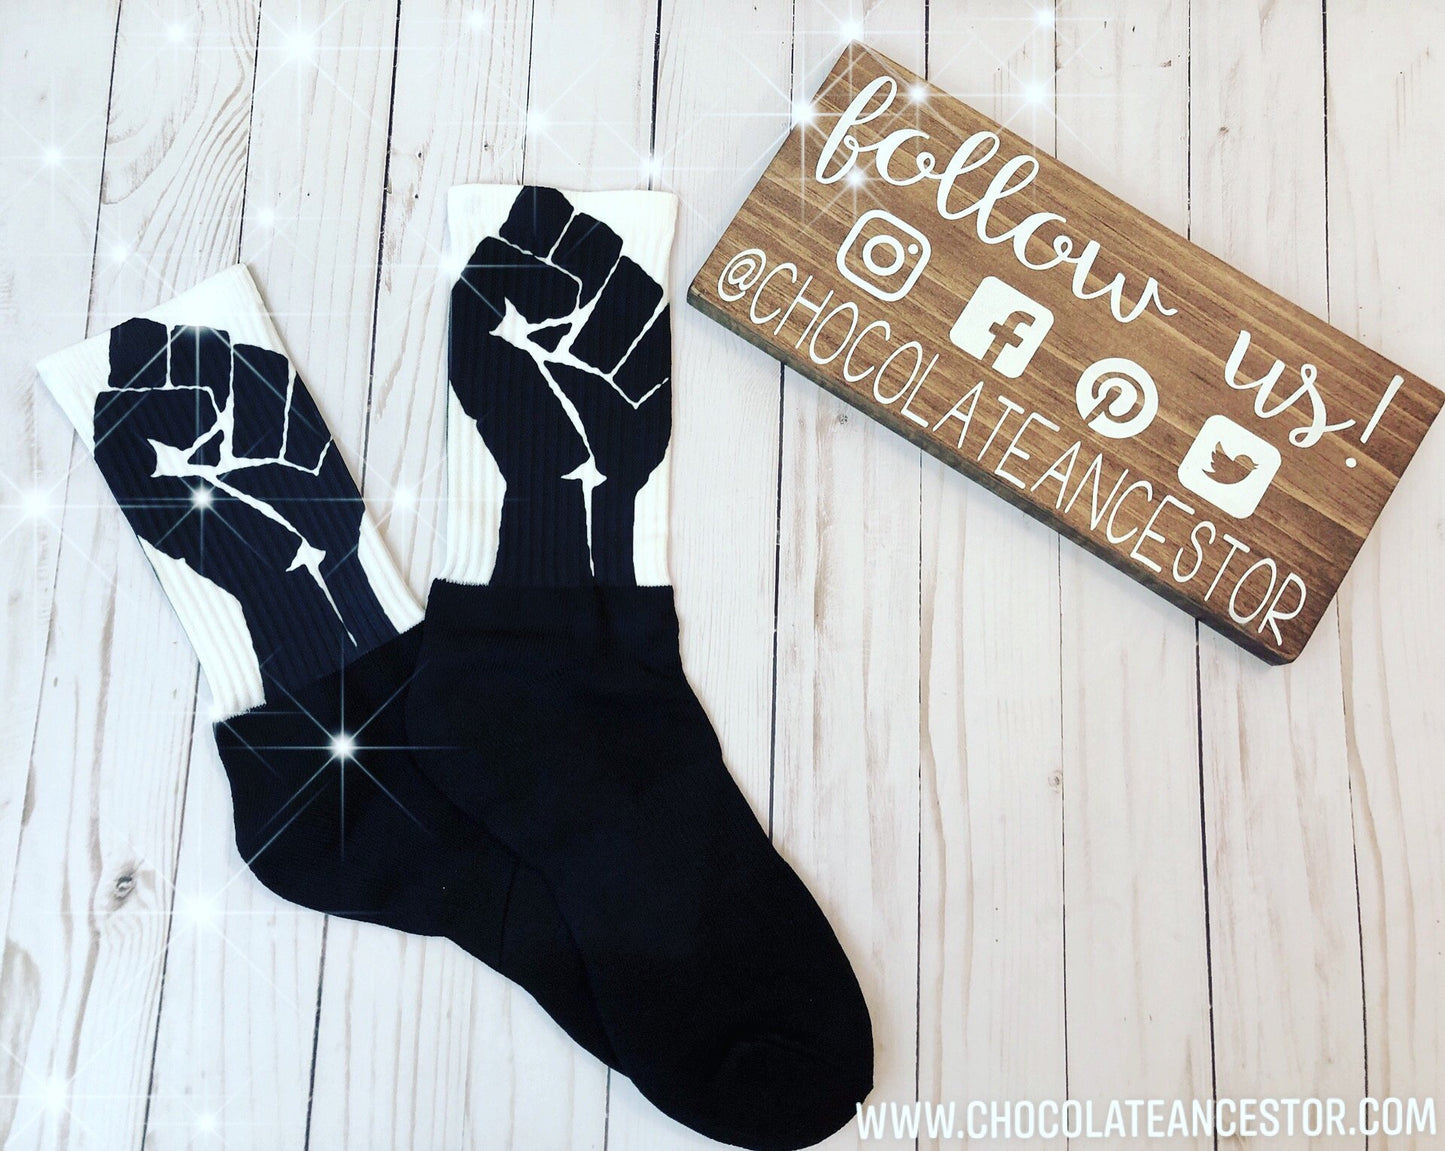 Black Power Fist Black foot socks - Chocolate Ancestor